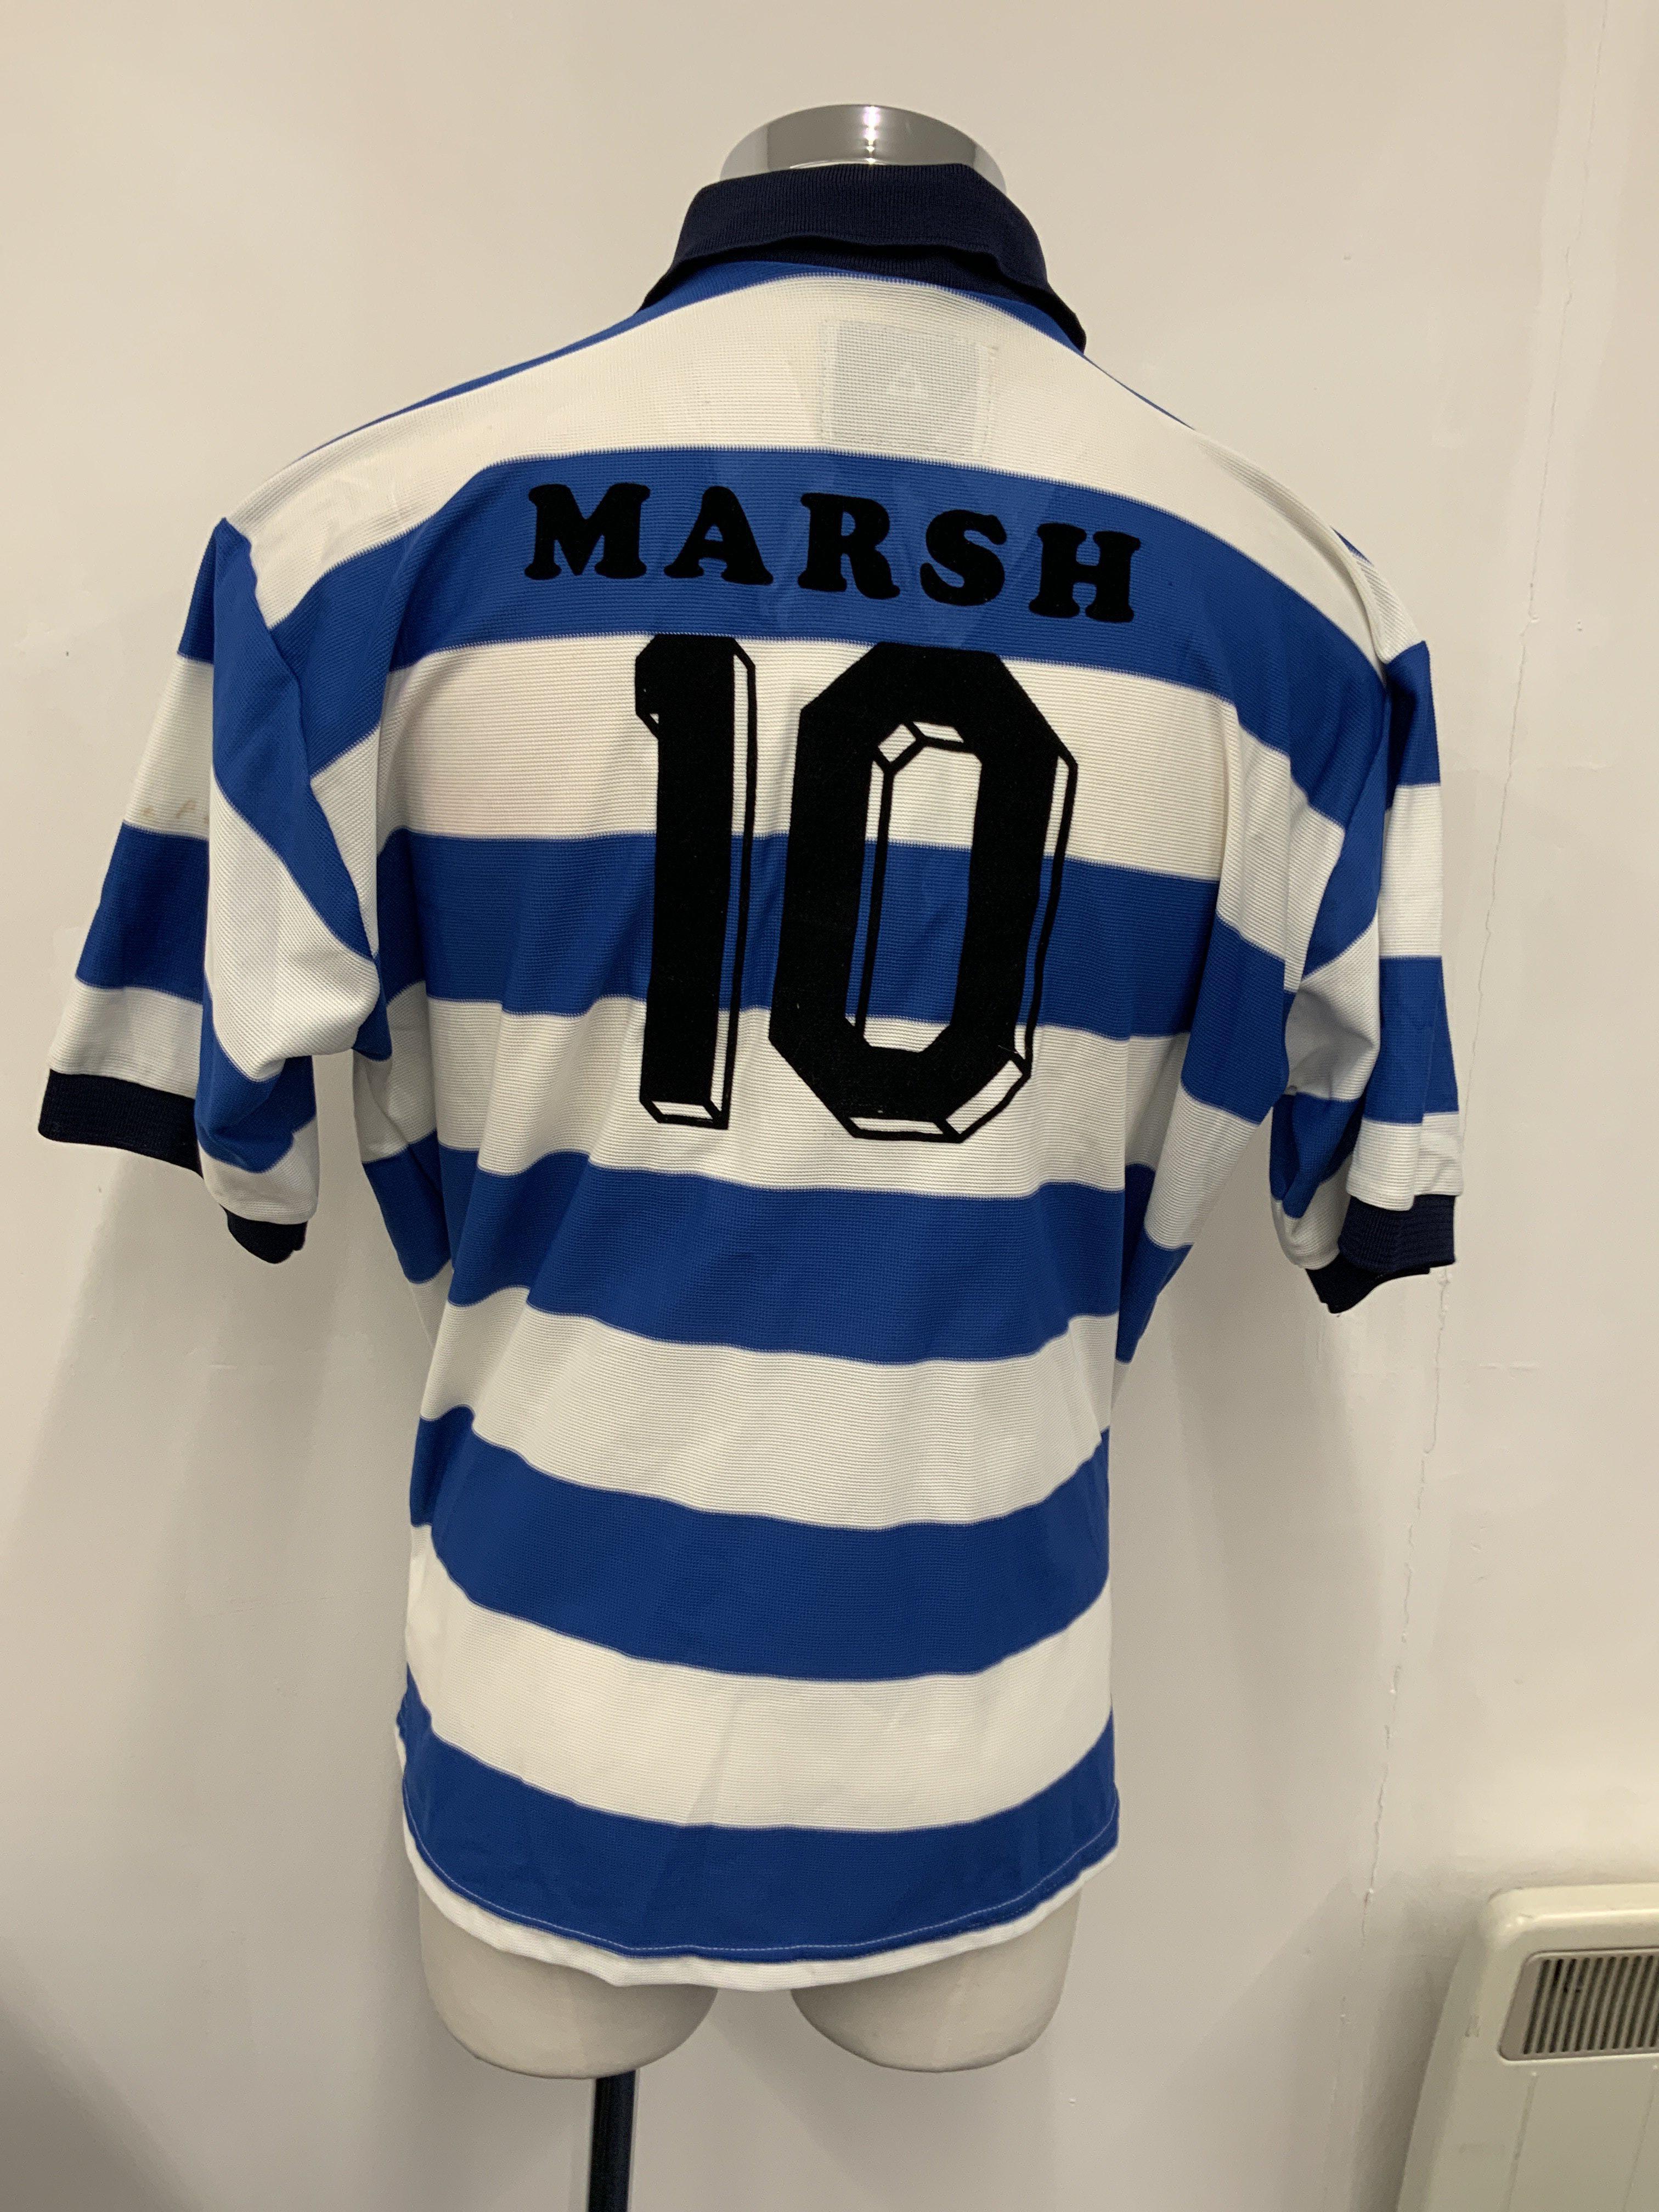 Rodney Marsh Signed QPR Football Shirt: 2001 - 200 - Image 2 of 2